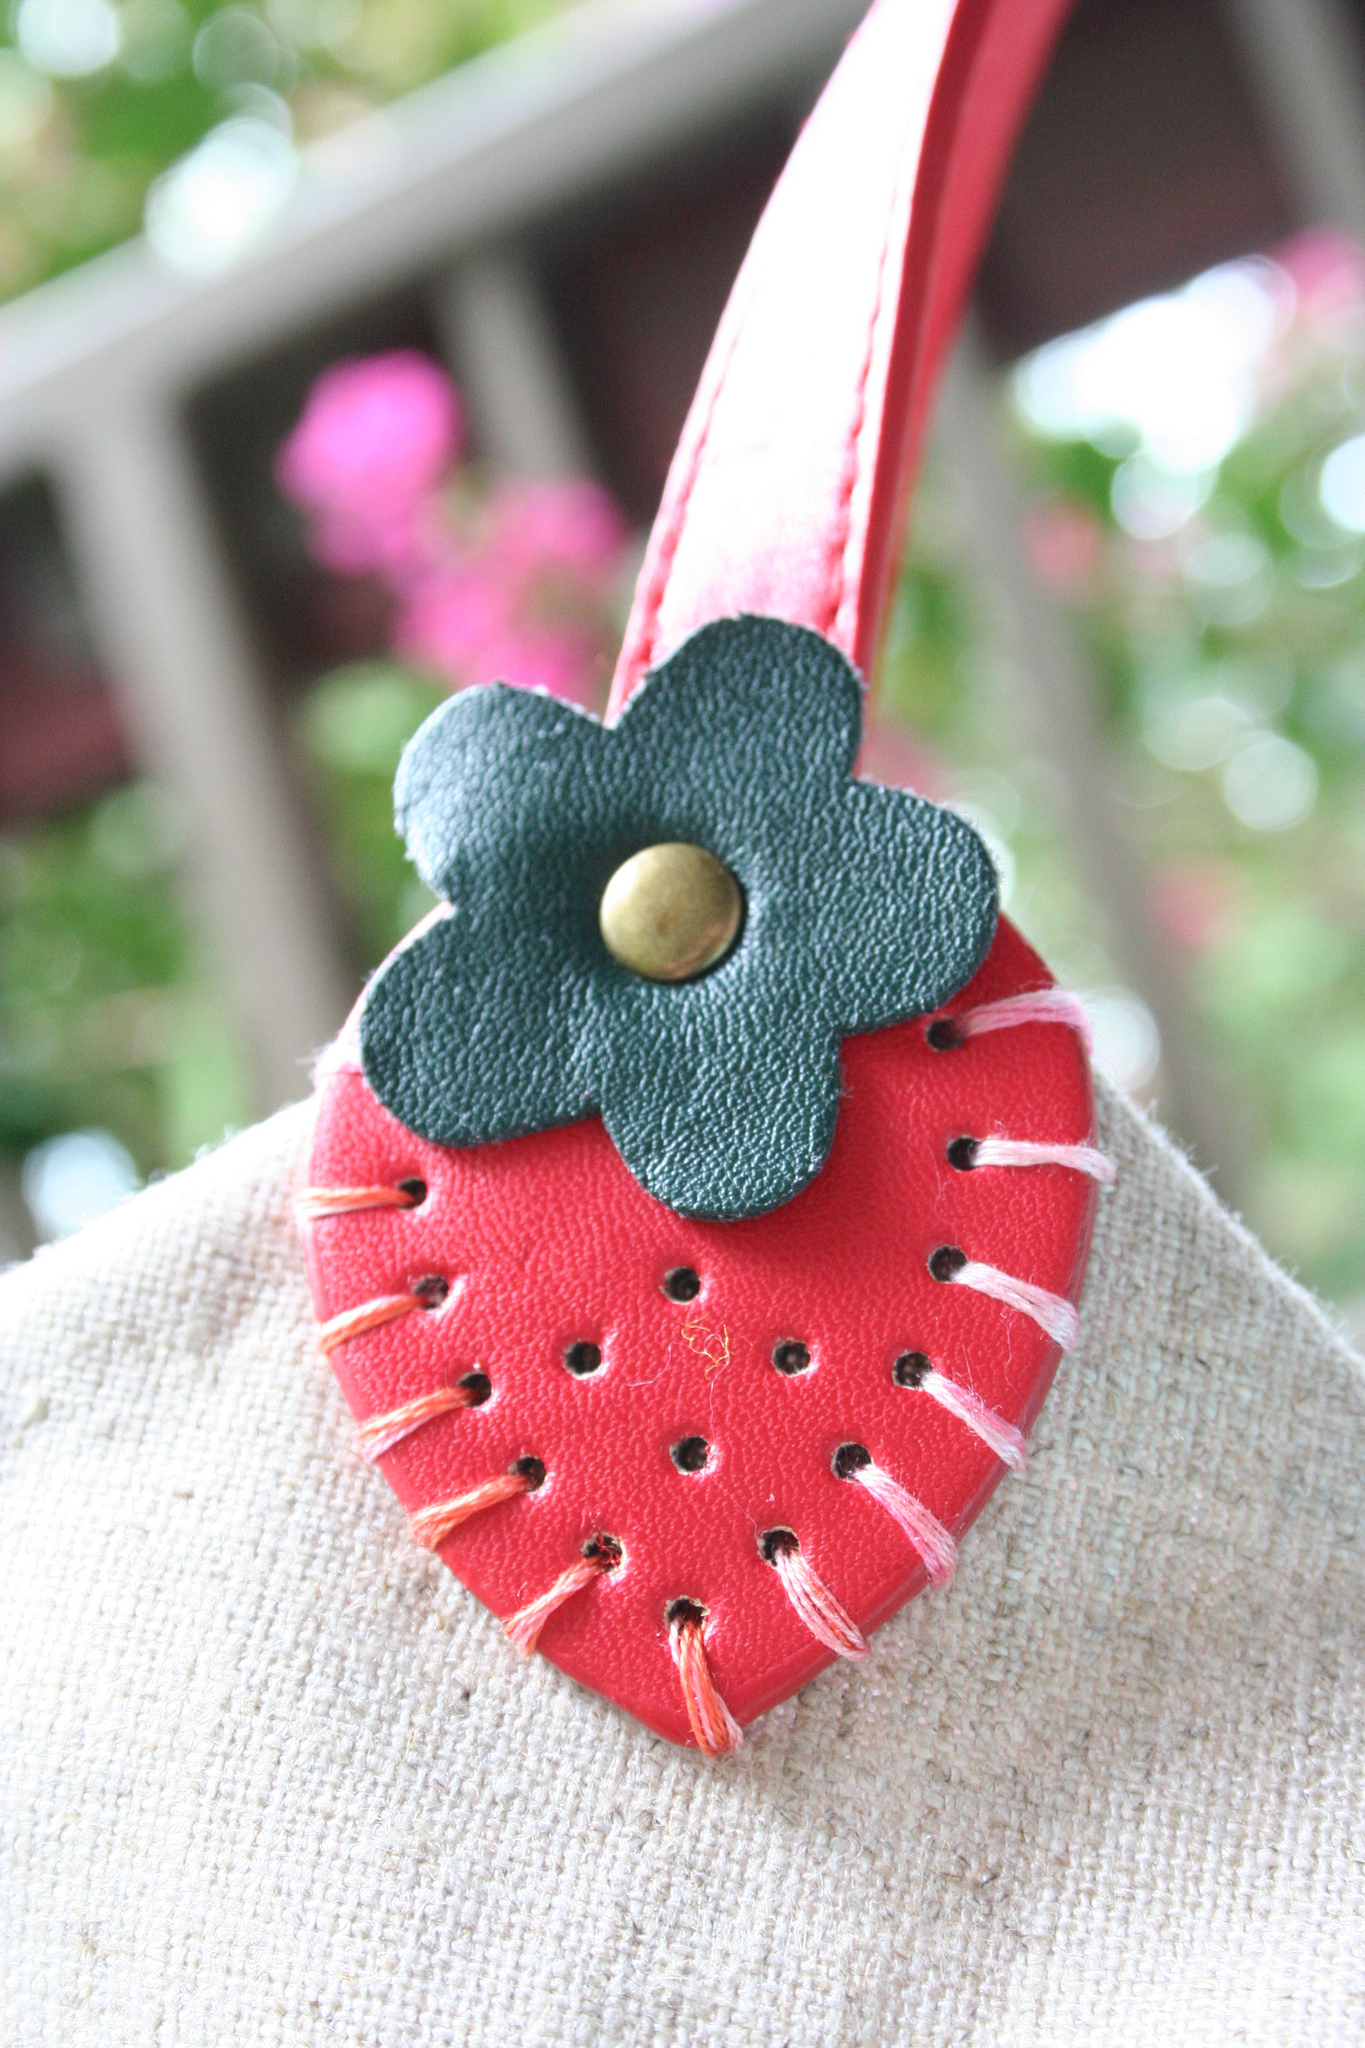 100% Hand stitched strawberry bag. : r/crafts